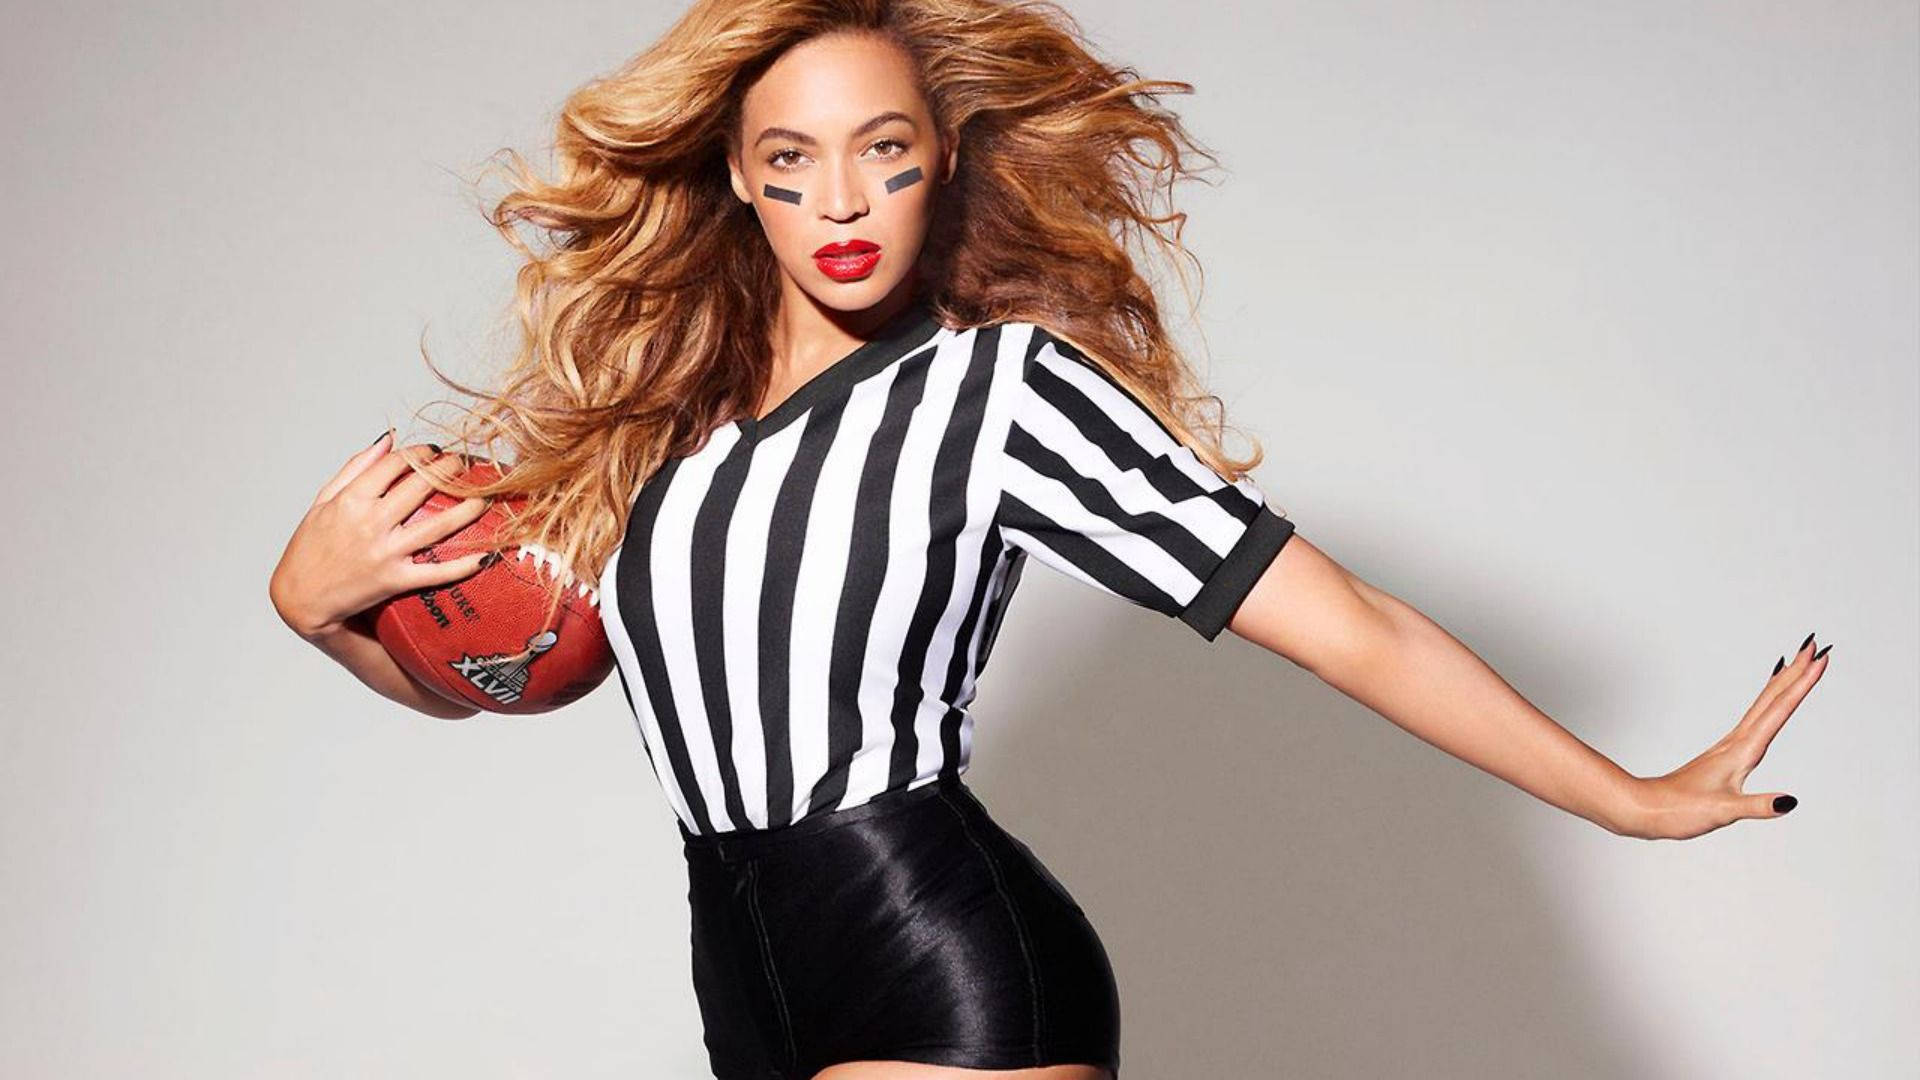 Beyonce rocks an American Football outfit Wallpaper